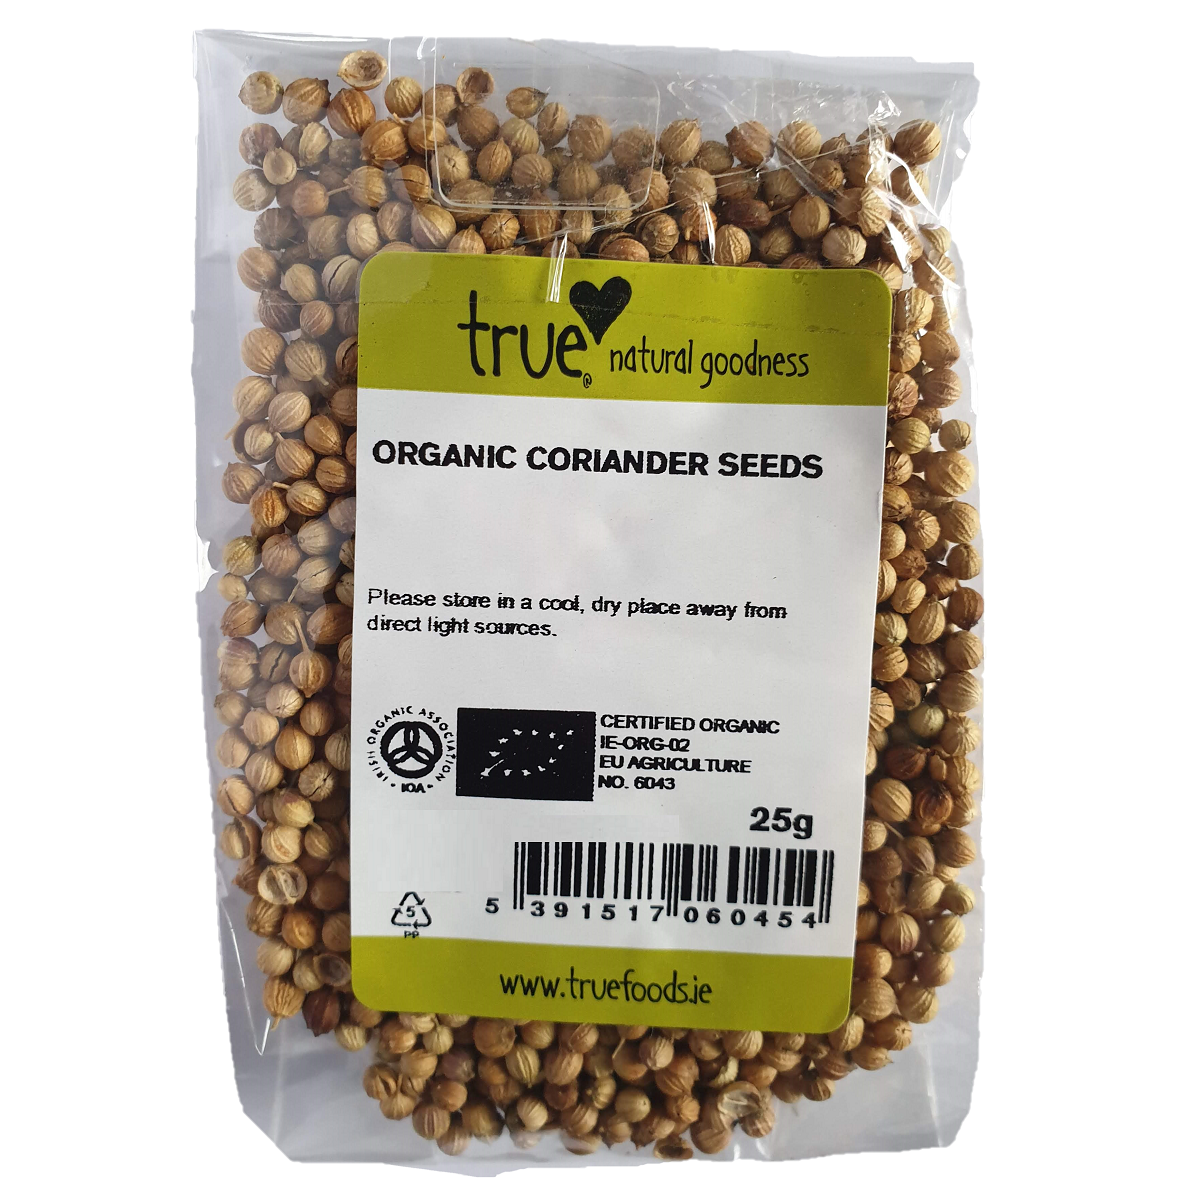 True Natural Goodness Organic Coriander Seeds 25g